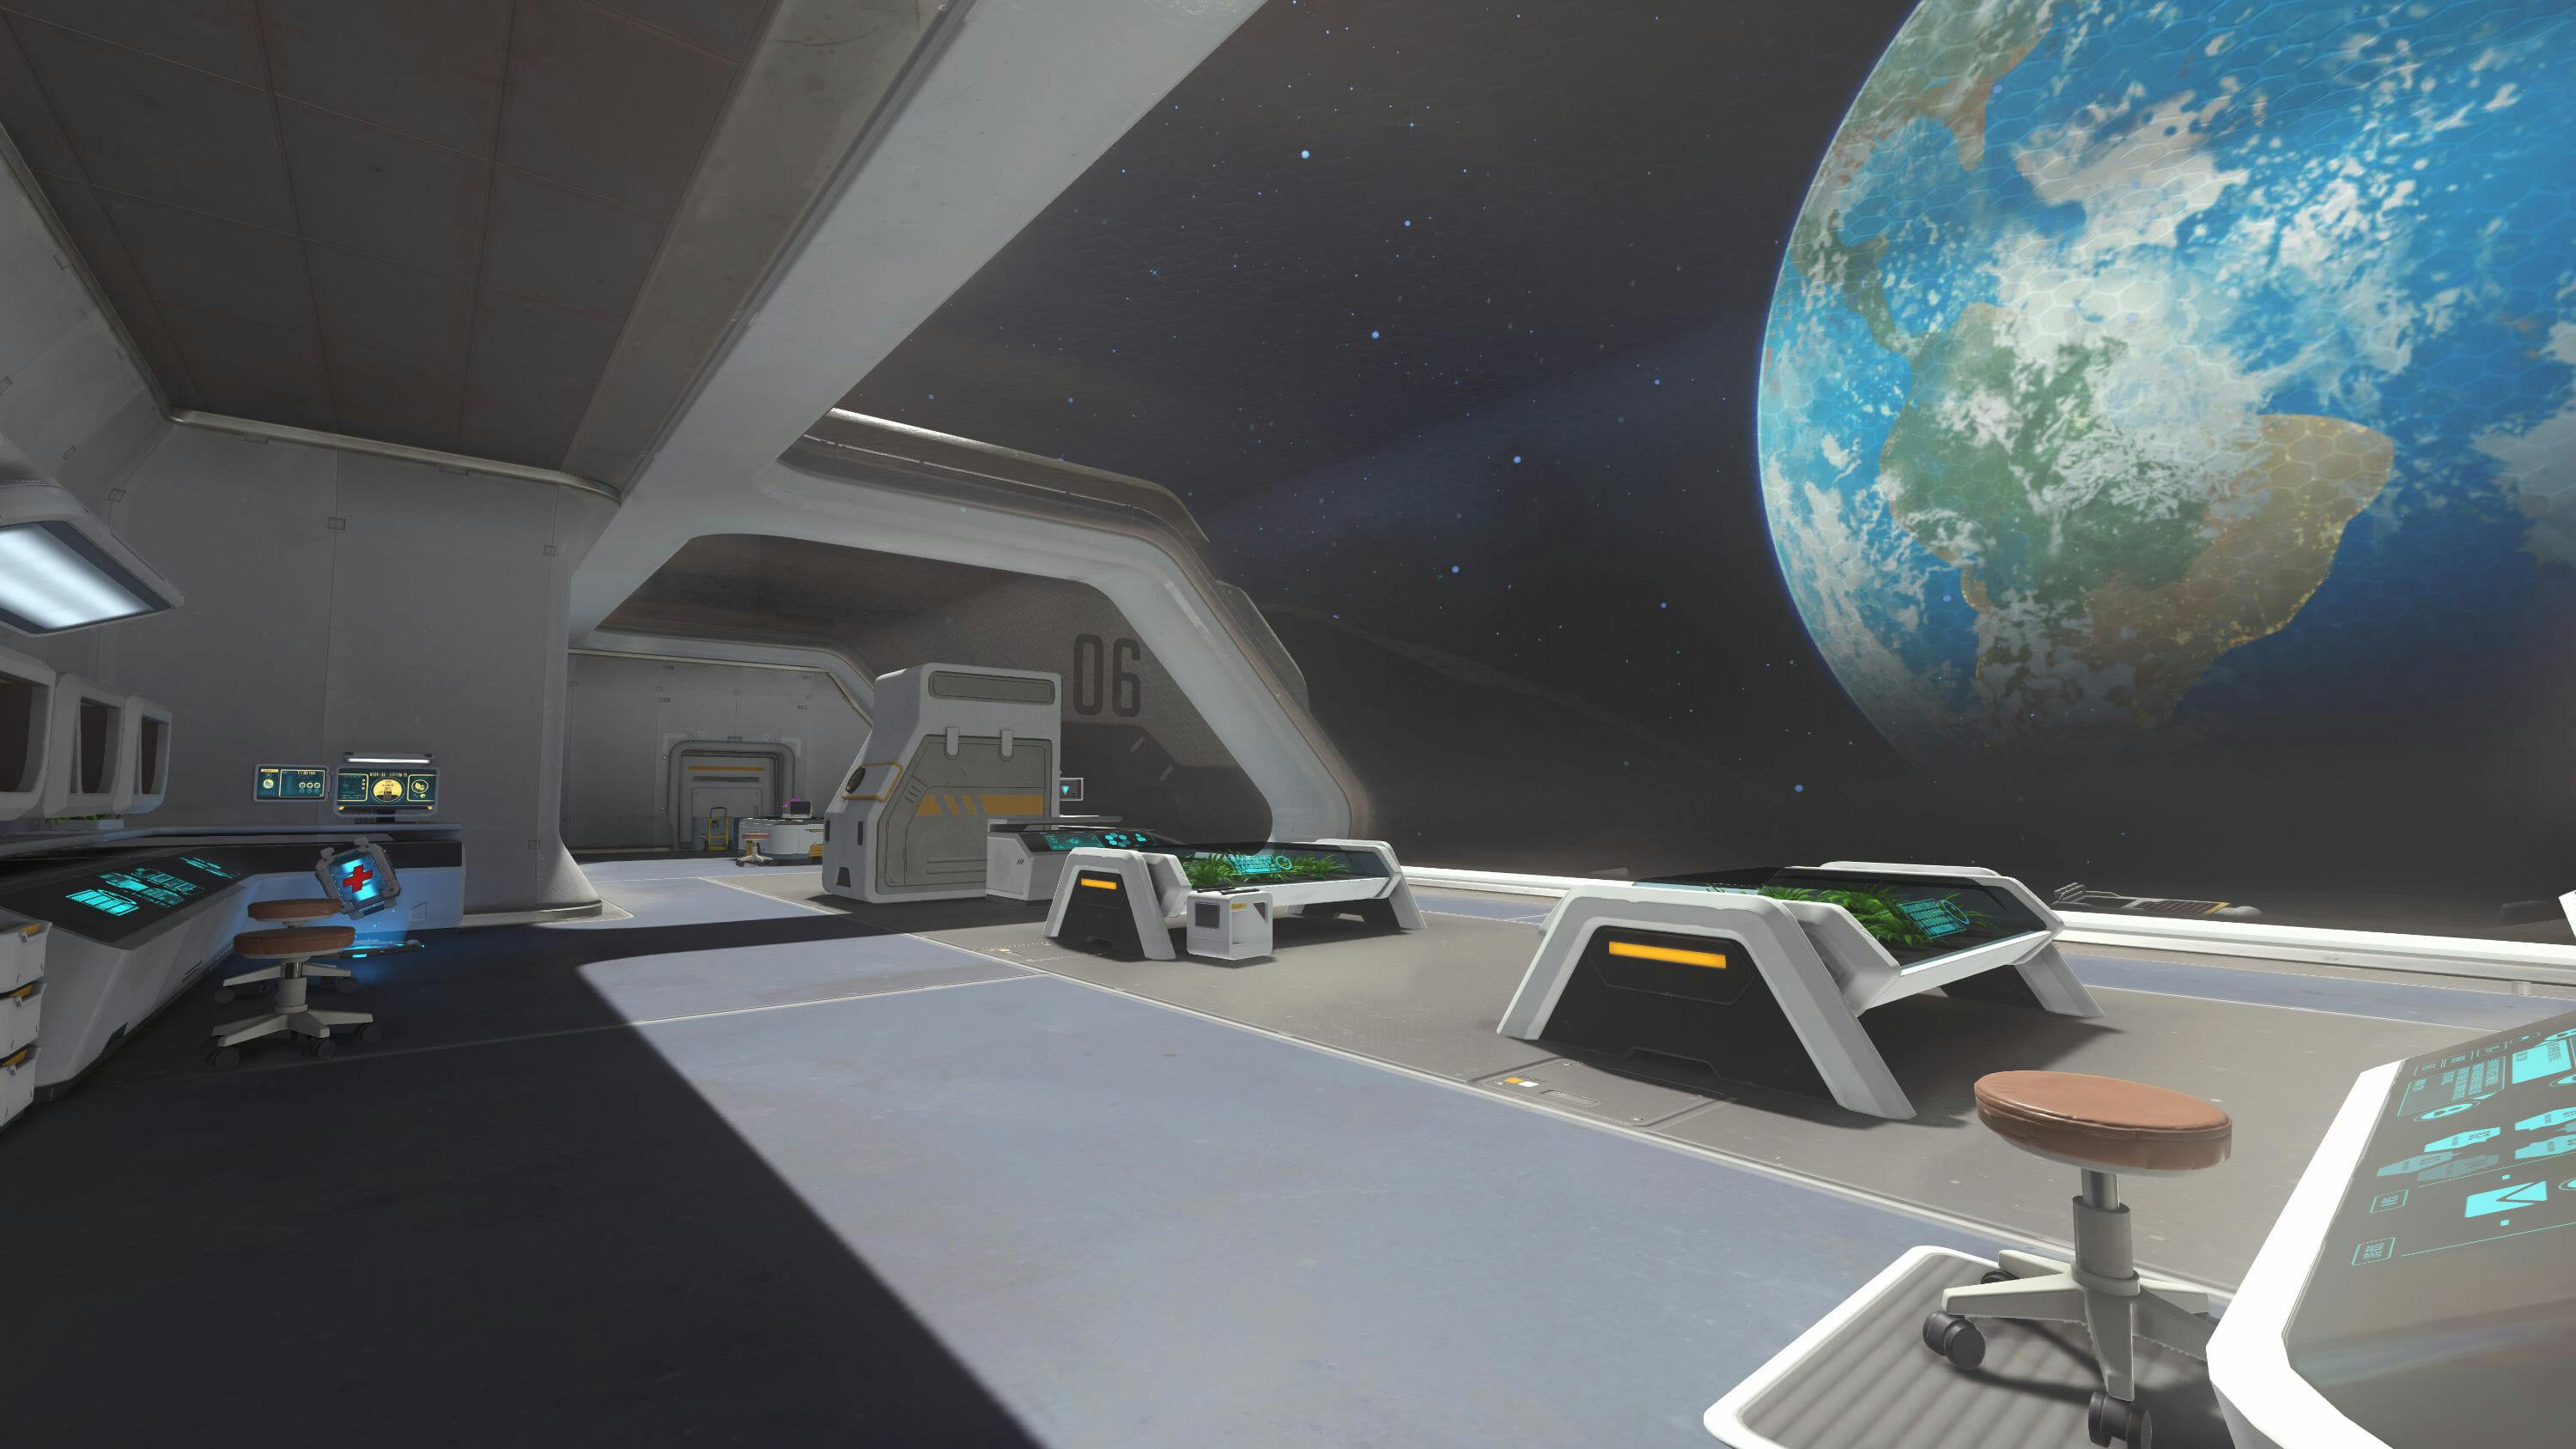 Overwatch Maps list : Horizon Lunar Colony